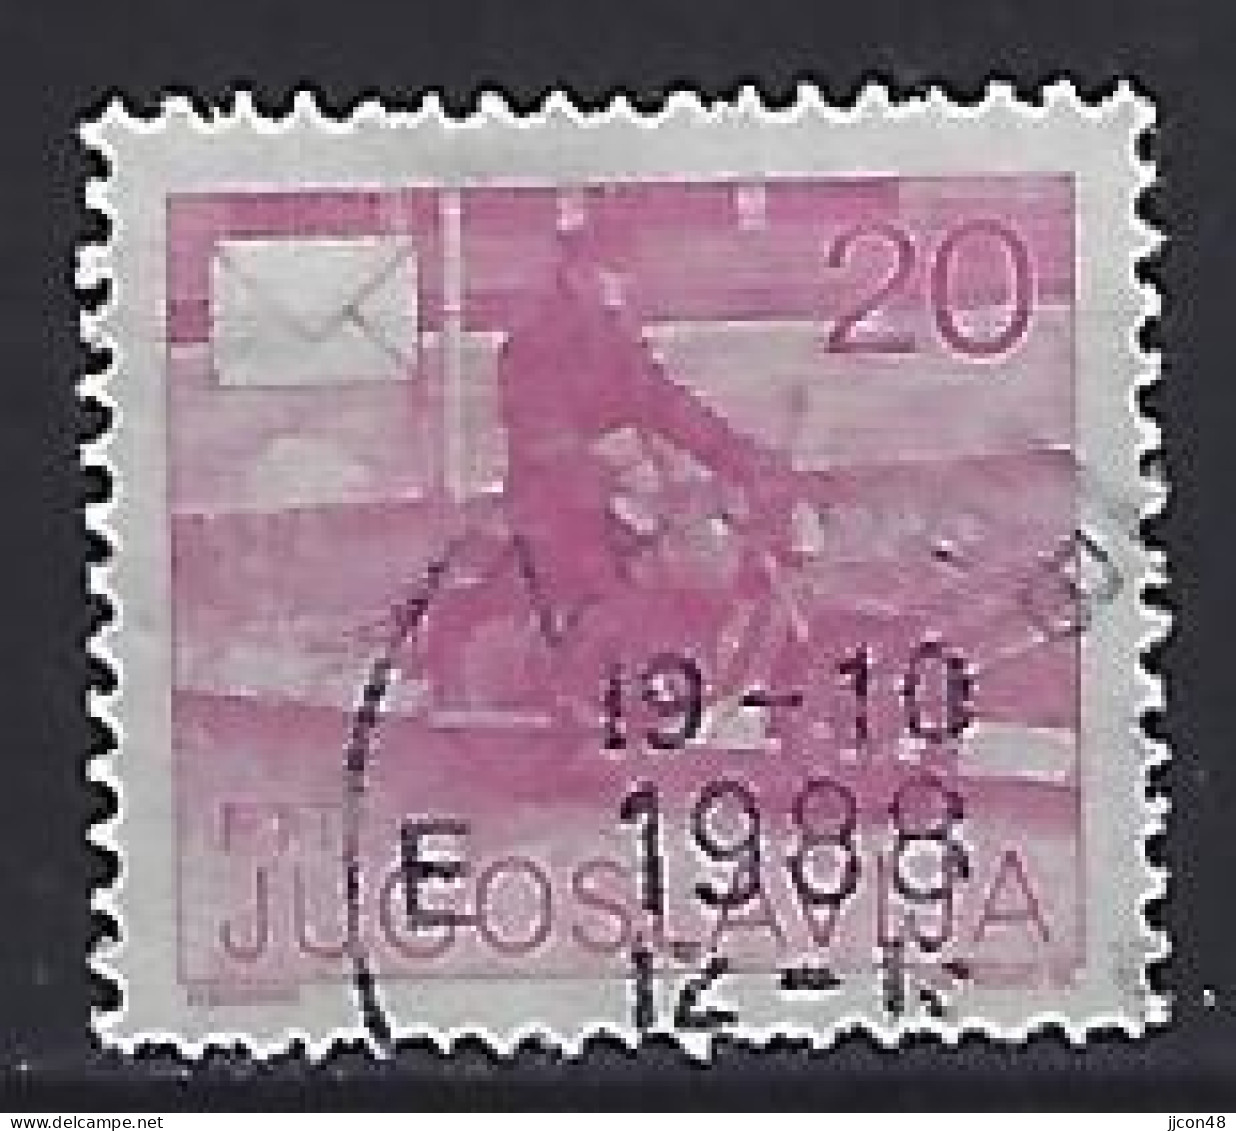 Jugoslavia 1986  Postdienst (o) Mi.2151 A - Used Stamps